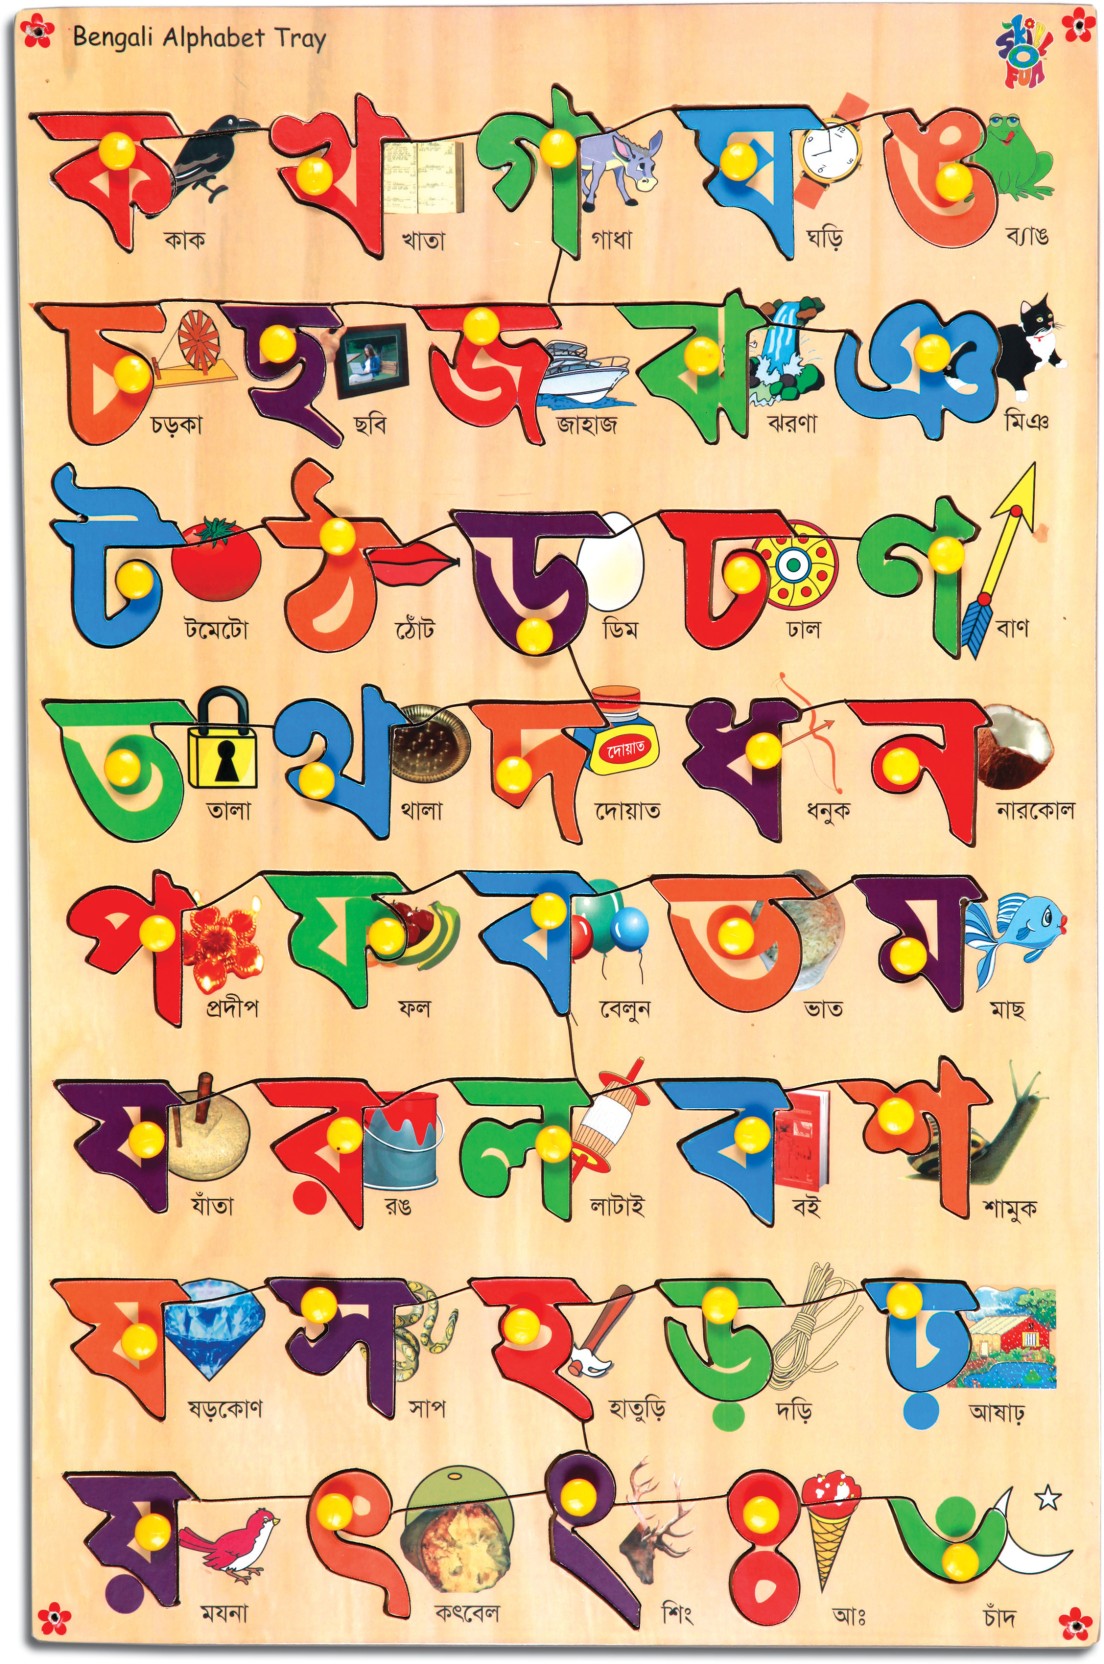 learn bengali alphabets